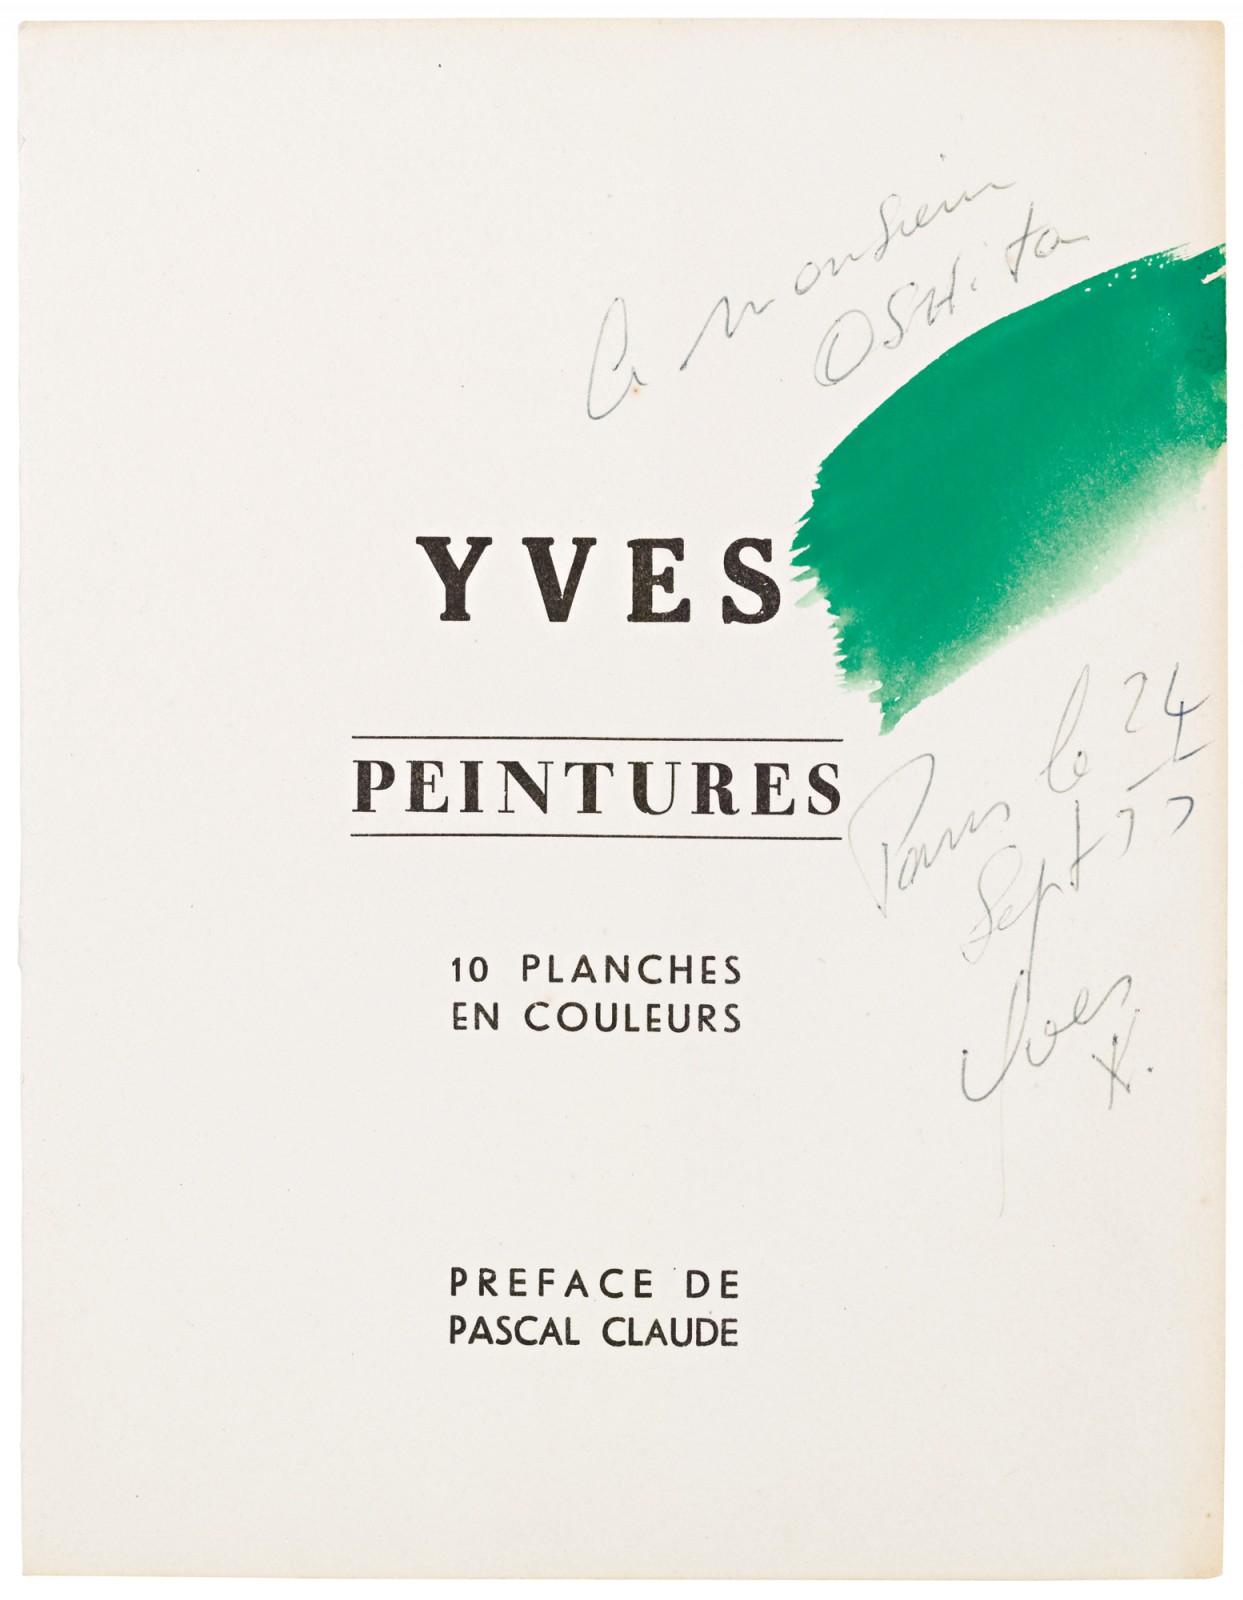 Yves Peintures